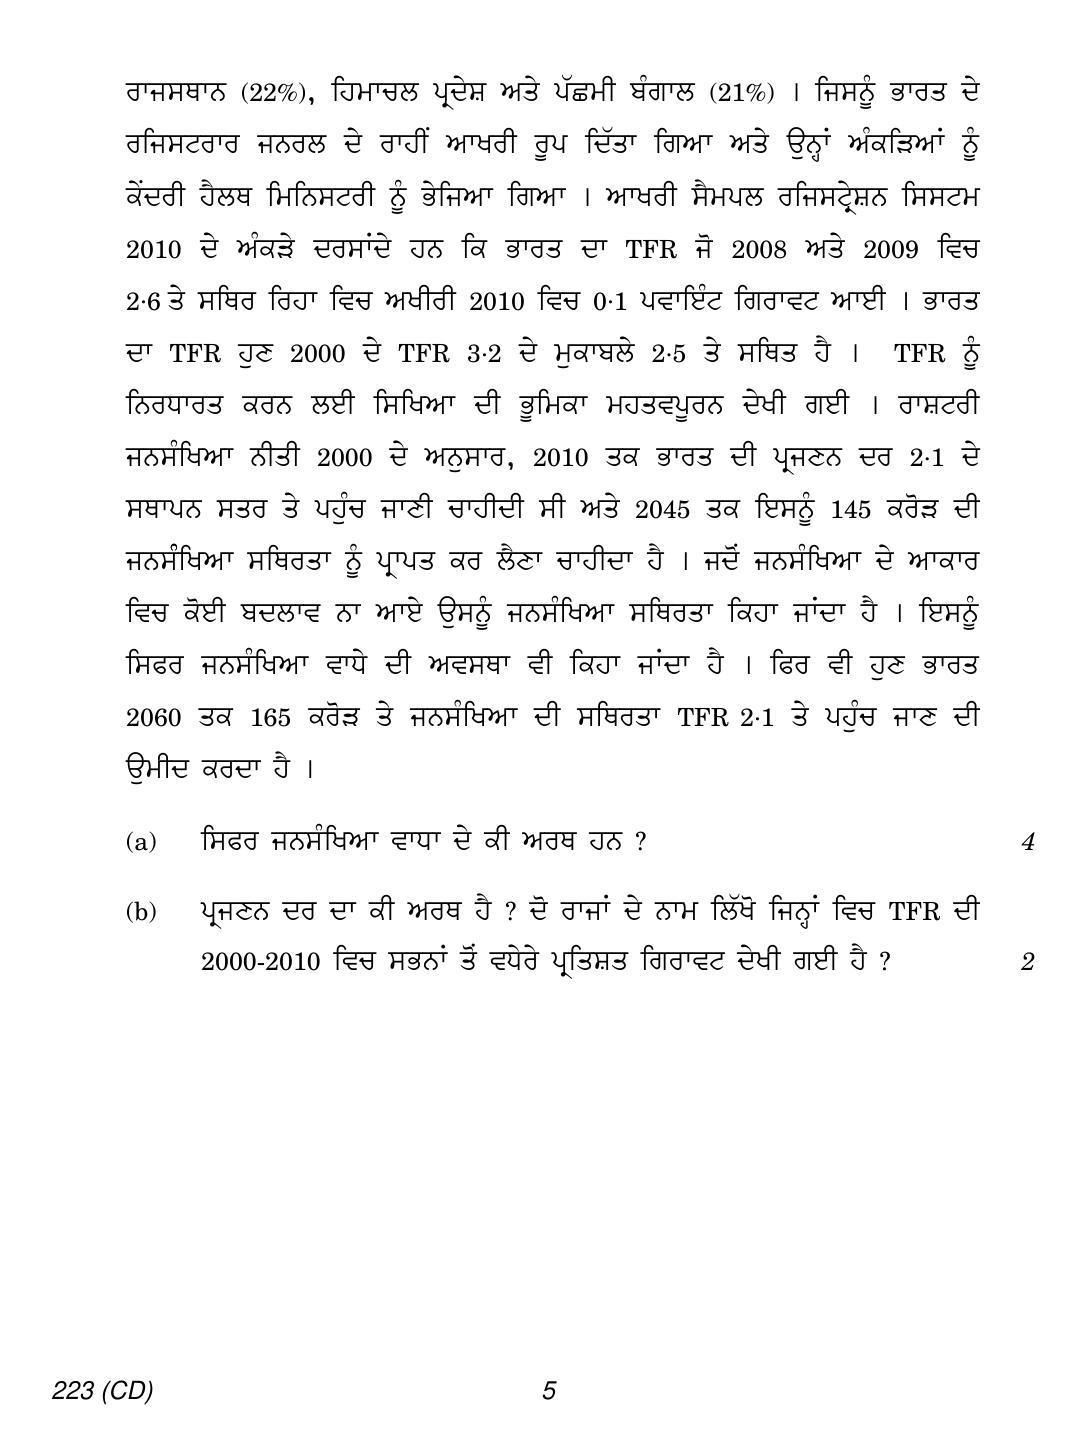 CBSE Class 12 223 (Sociology Punjabi CD) 2018 Question Paper - Page 5